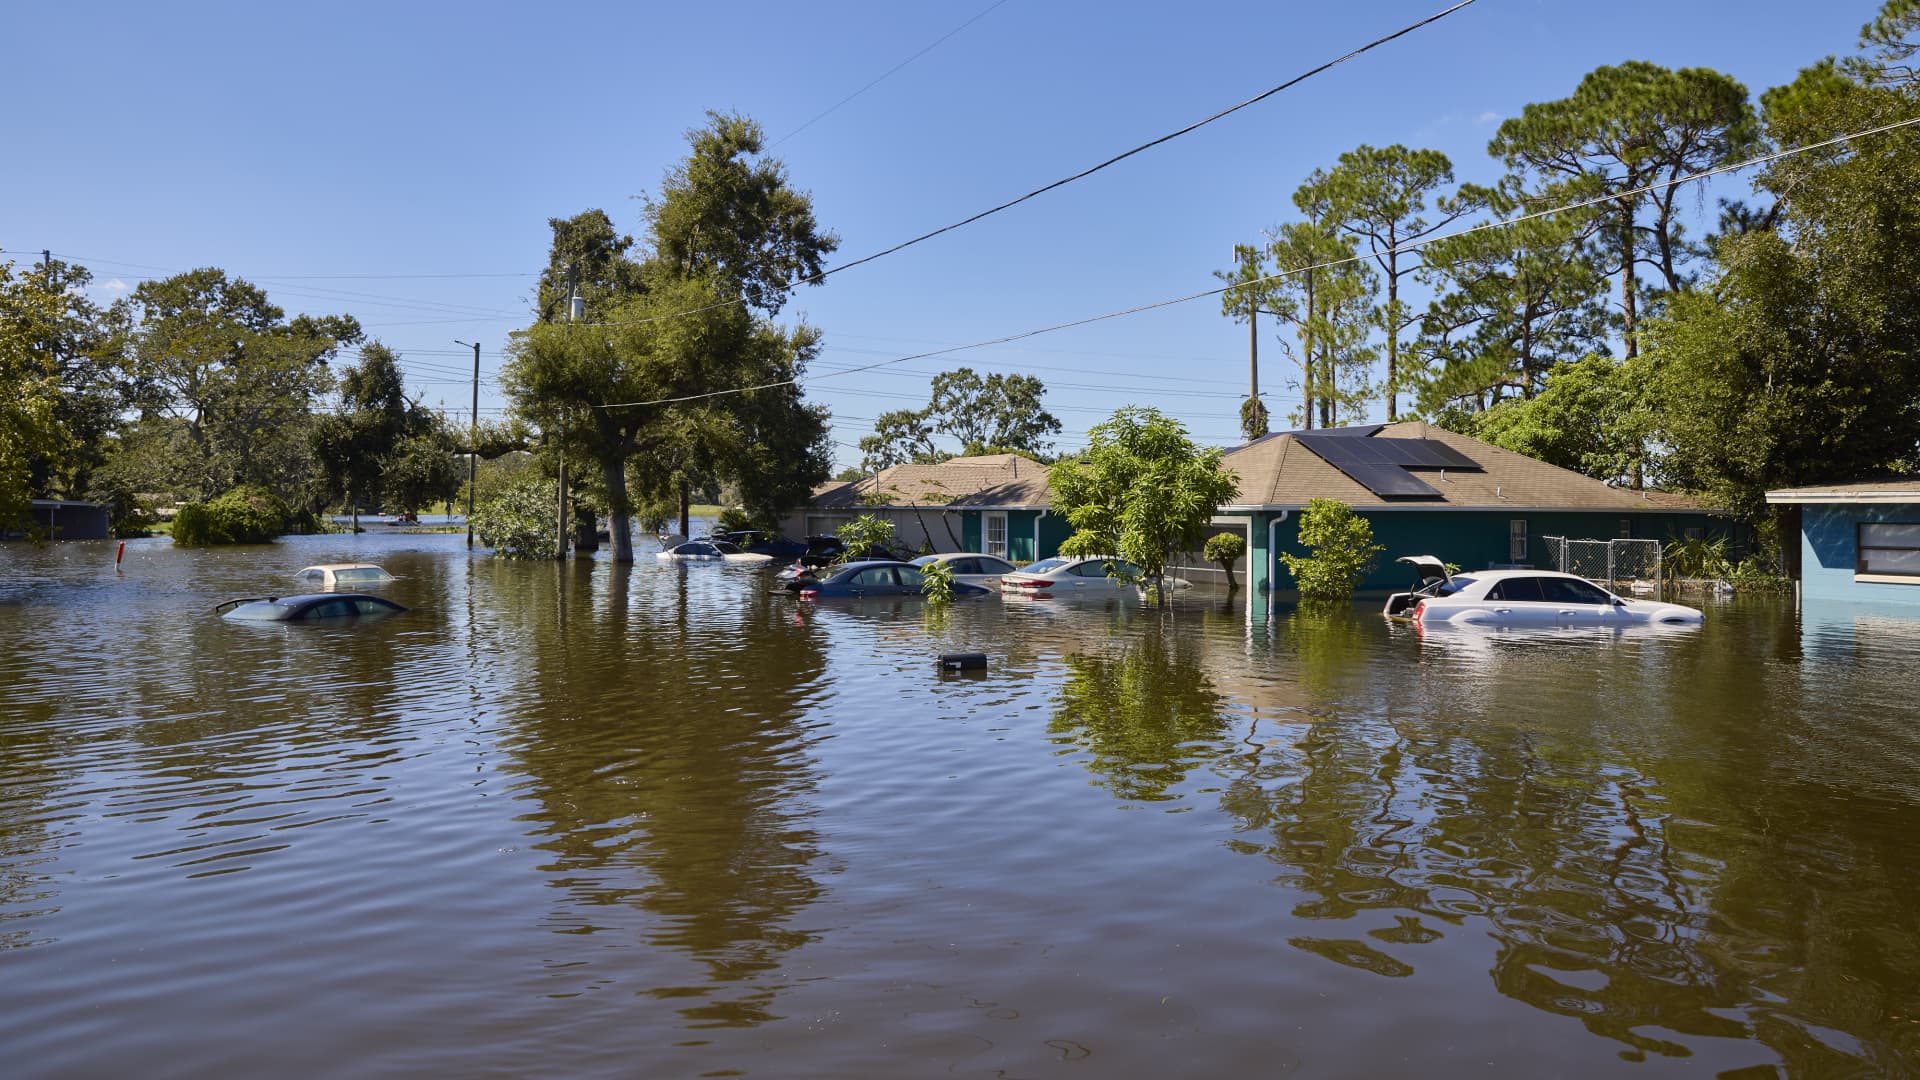 Photos show massive recovery days after Hurricane Ian hit Florida, Carolinas - CNBC